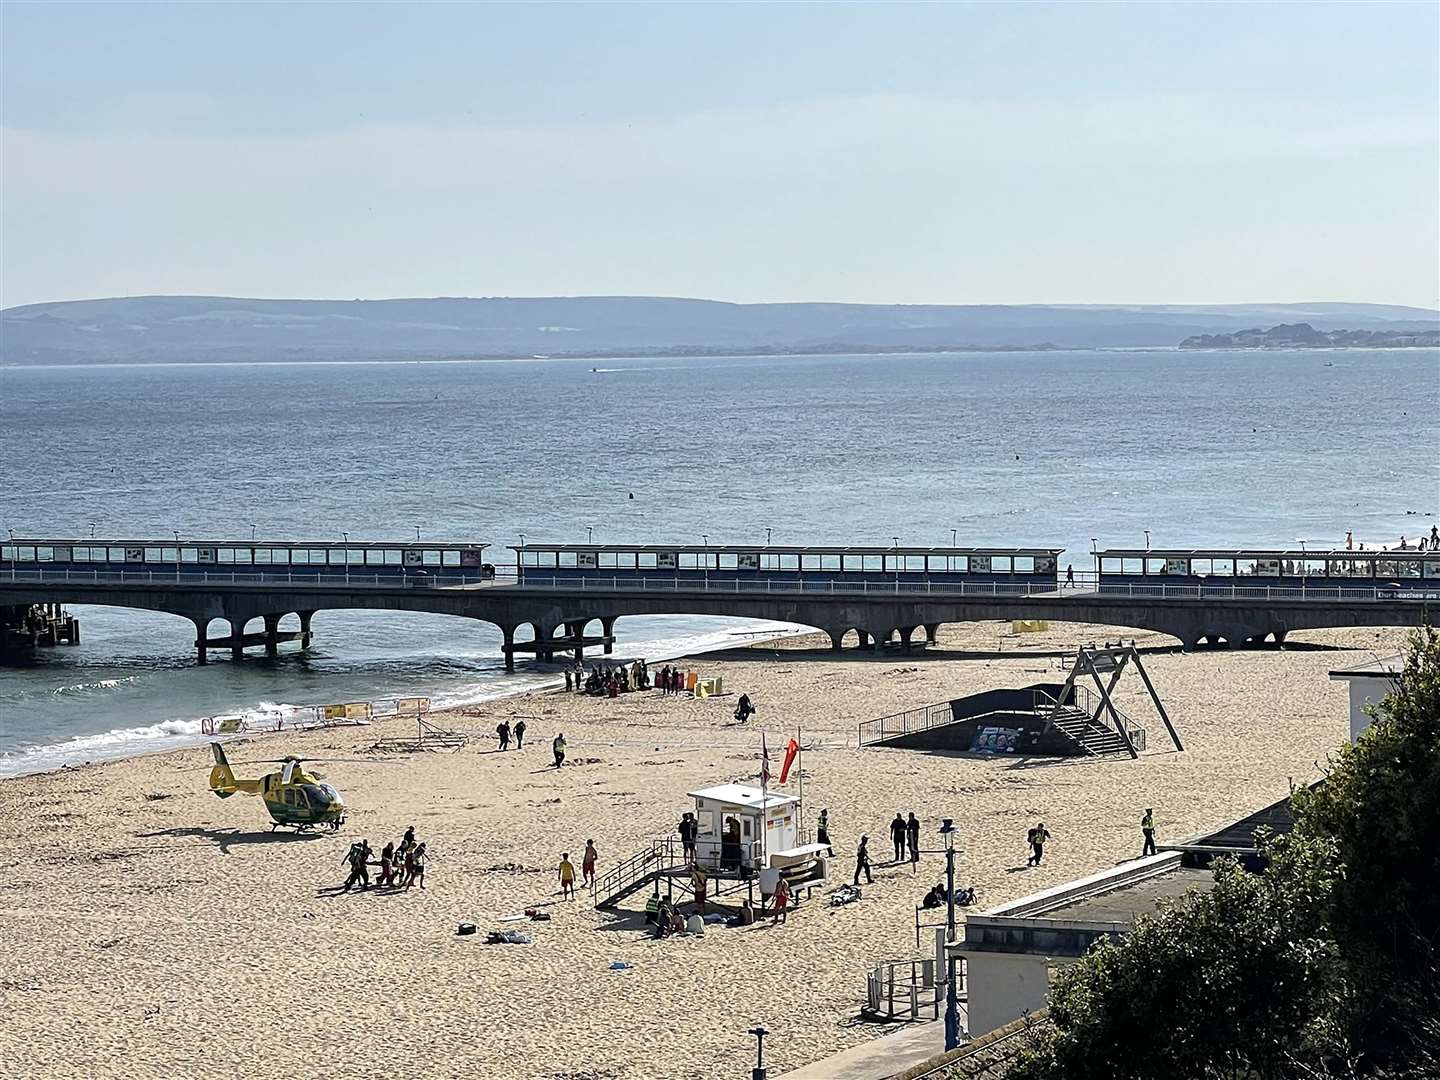 The scene at Bournemouth beach on Wednesday (Professor Dimitrios Buhalis)